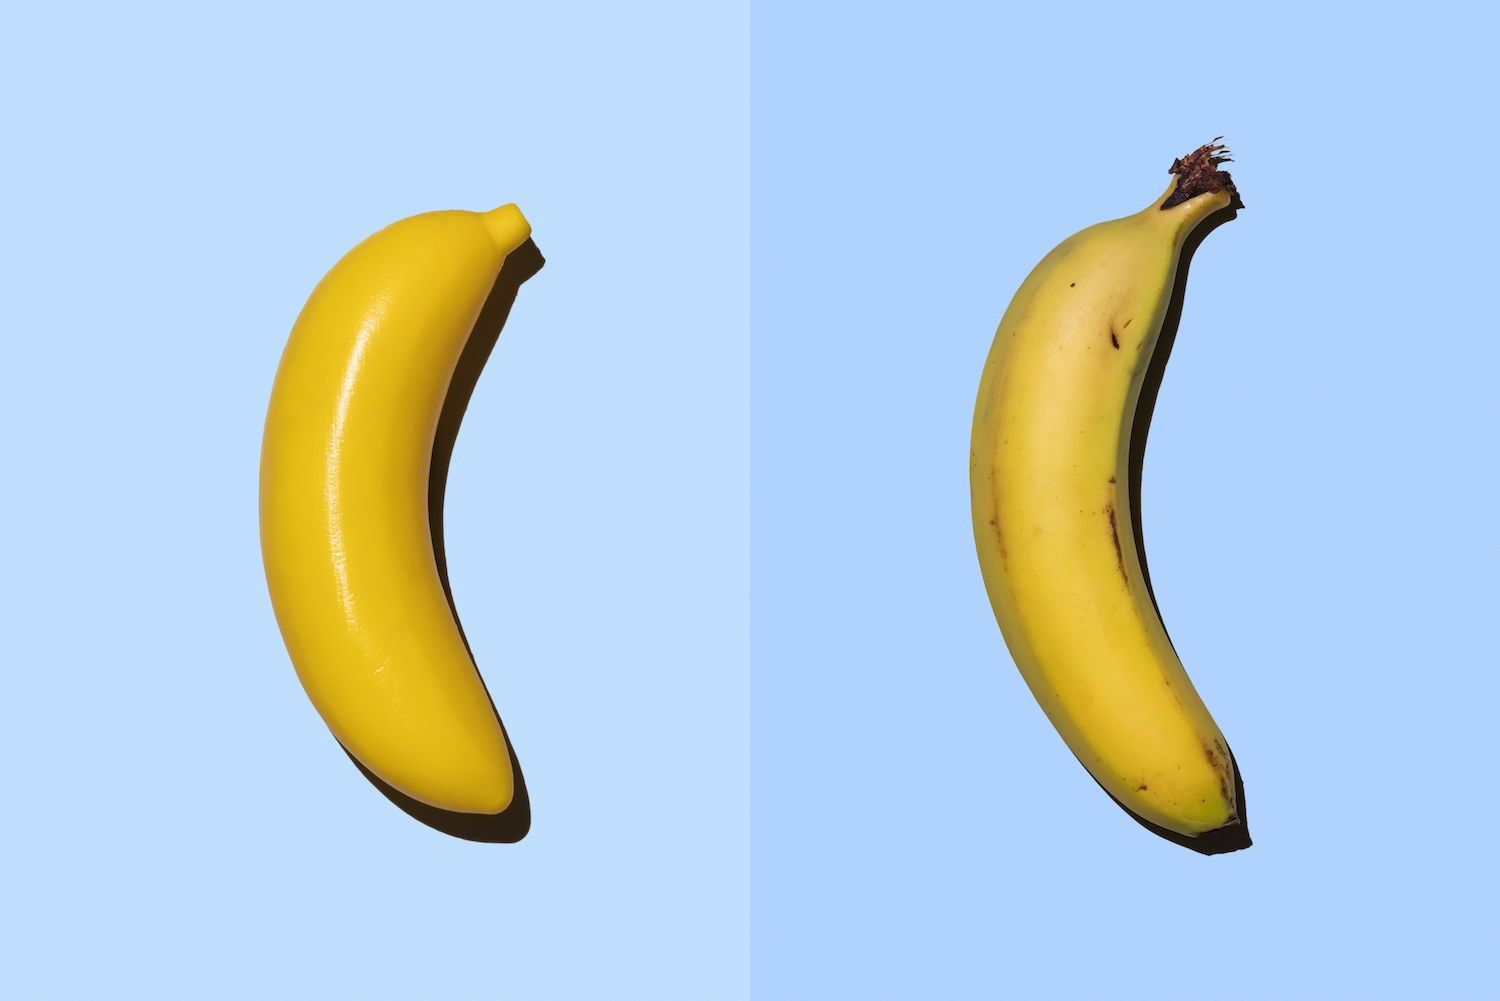 Plastic banana beside real banana